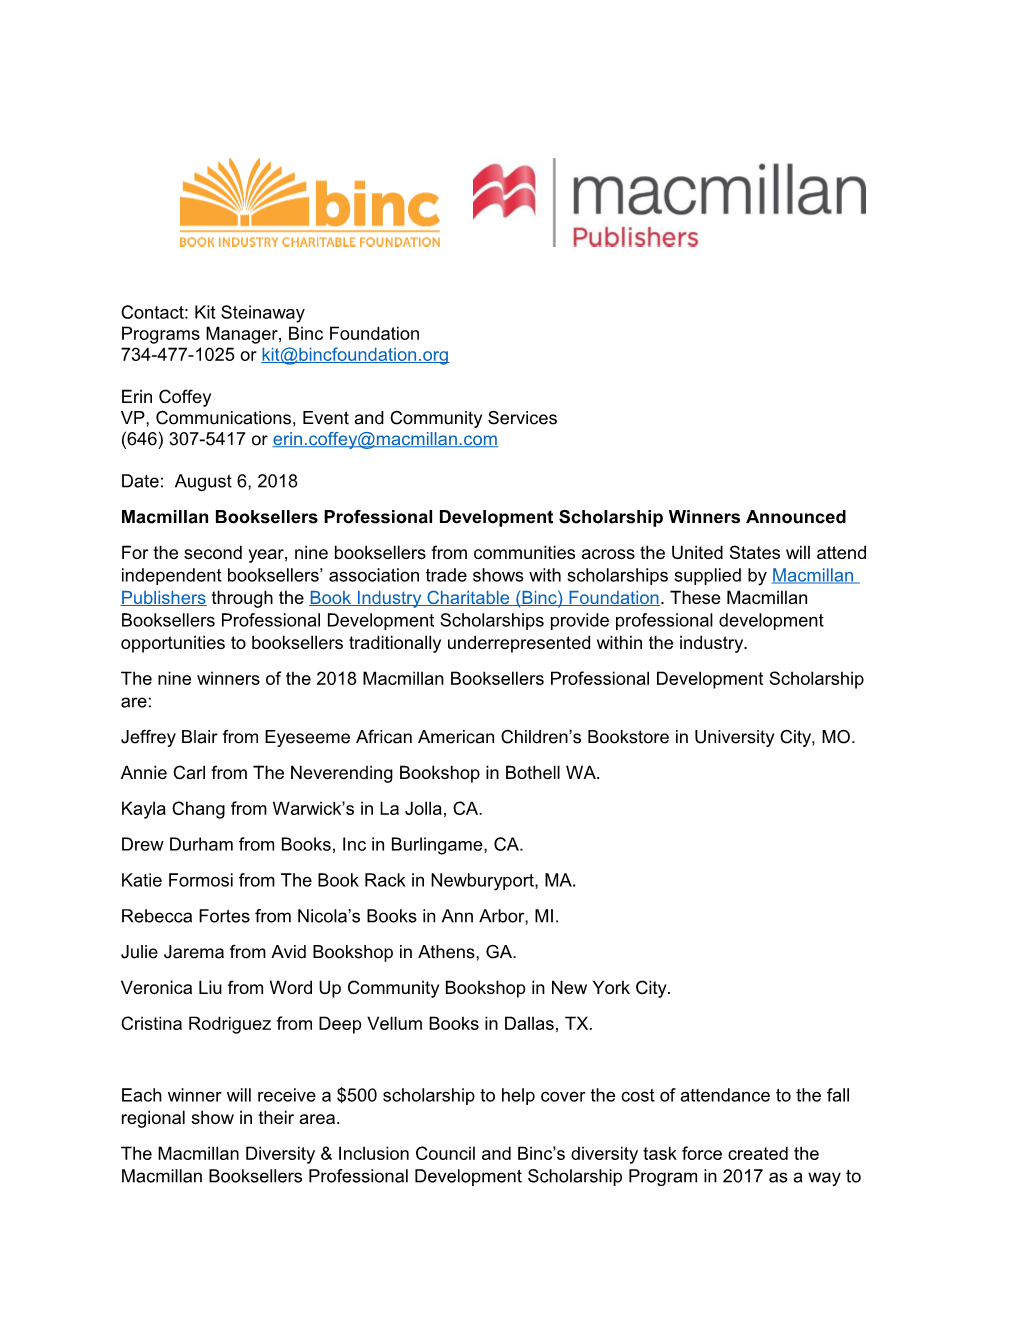 Macmillan Booksellers Professional Development Scholarship Winners Announced